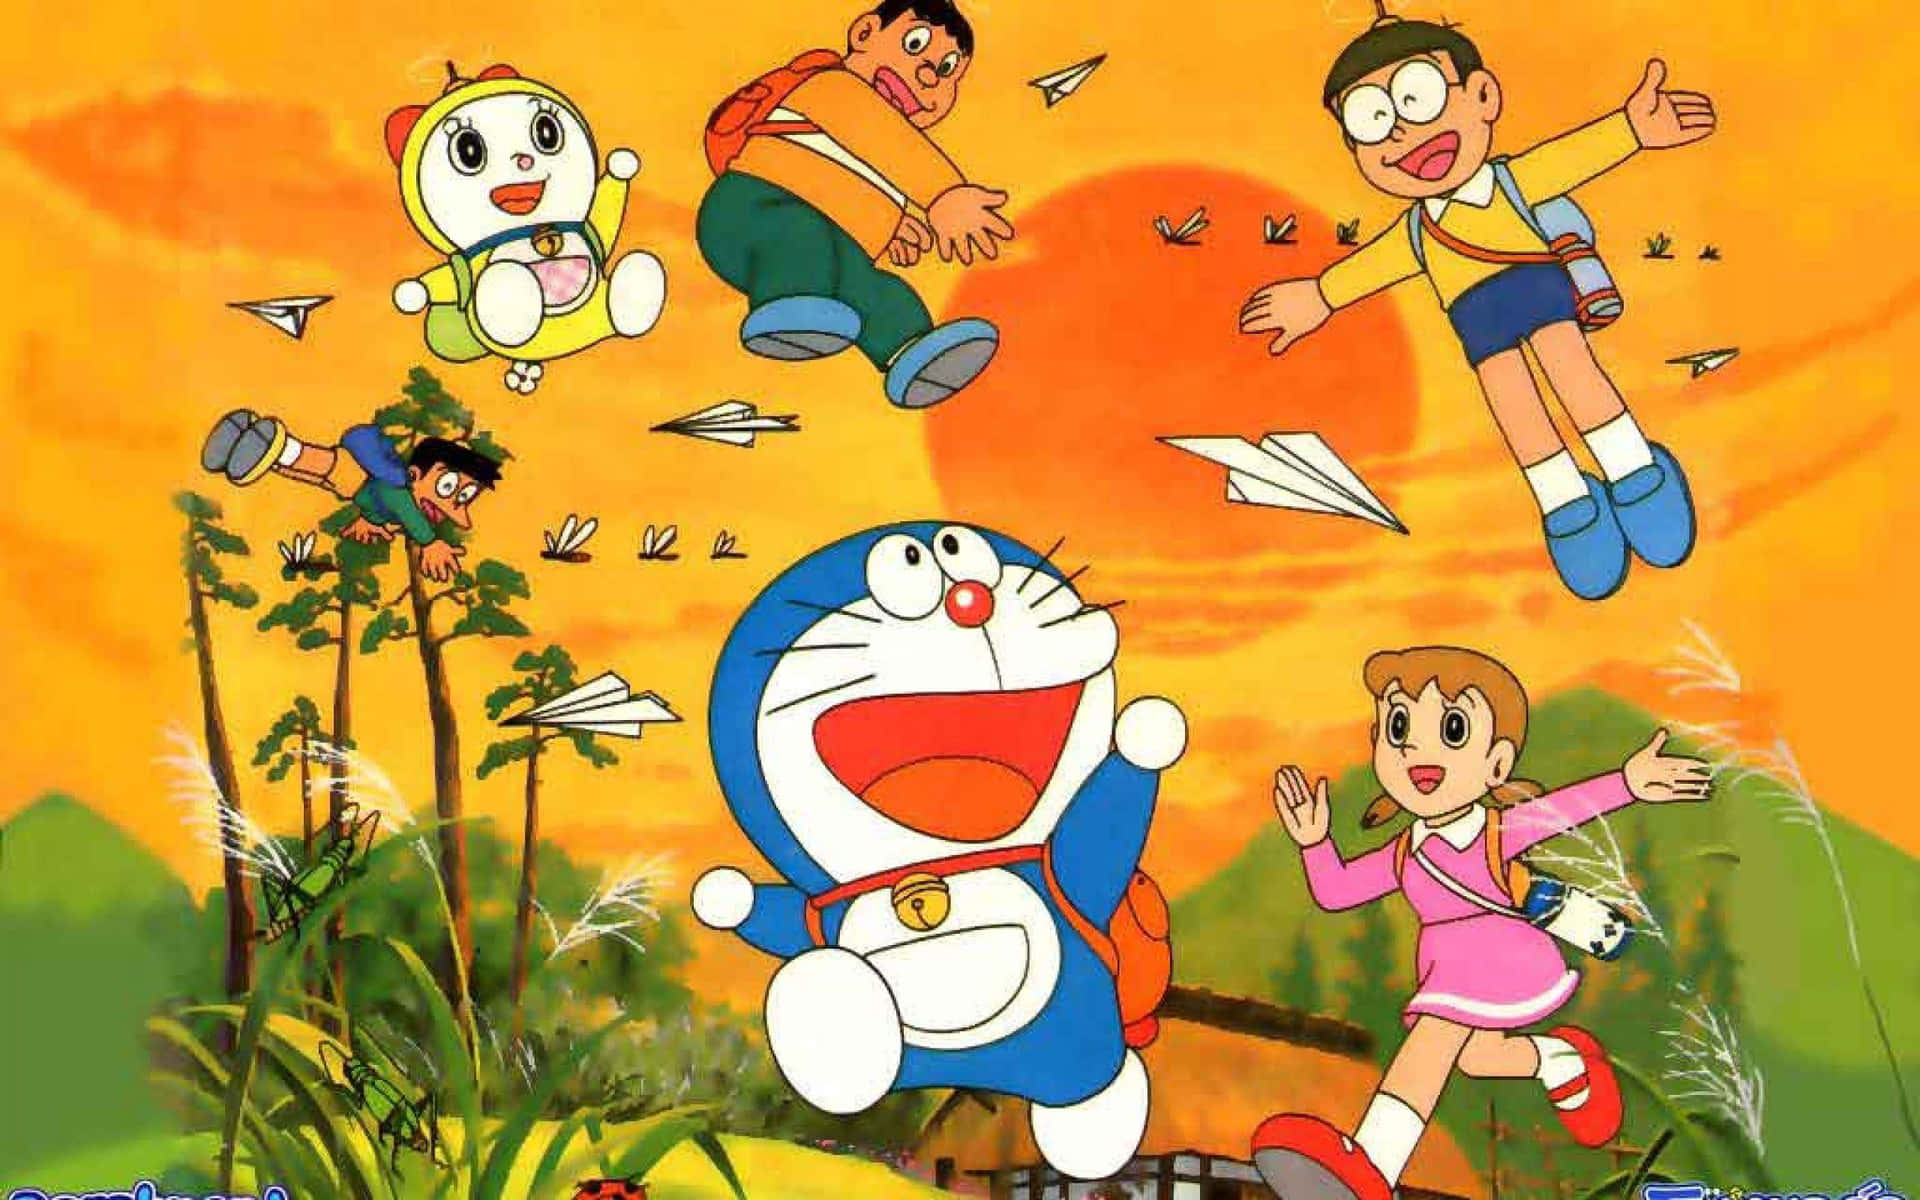 Doraemonbaggrundsbillede.